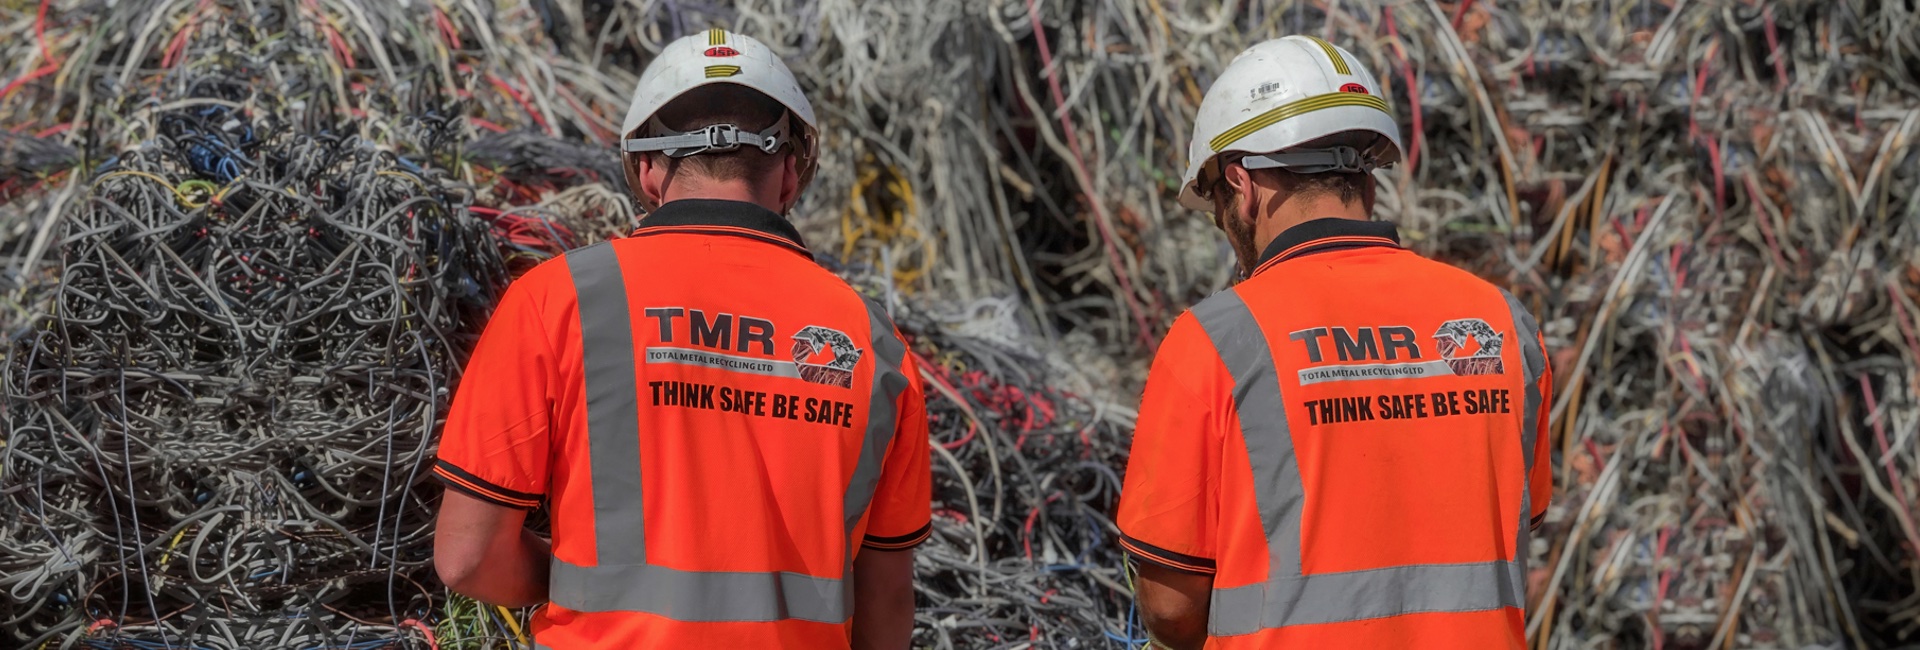 Two scrap metal workers both wearing orange TMR branded hi vis t-shirts and hard hats, sorting scrap wire.